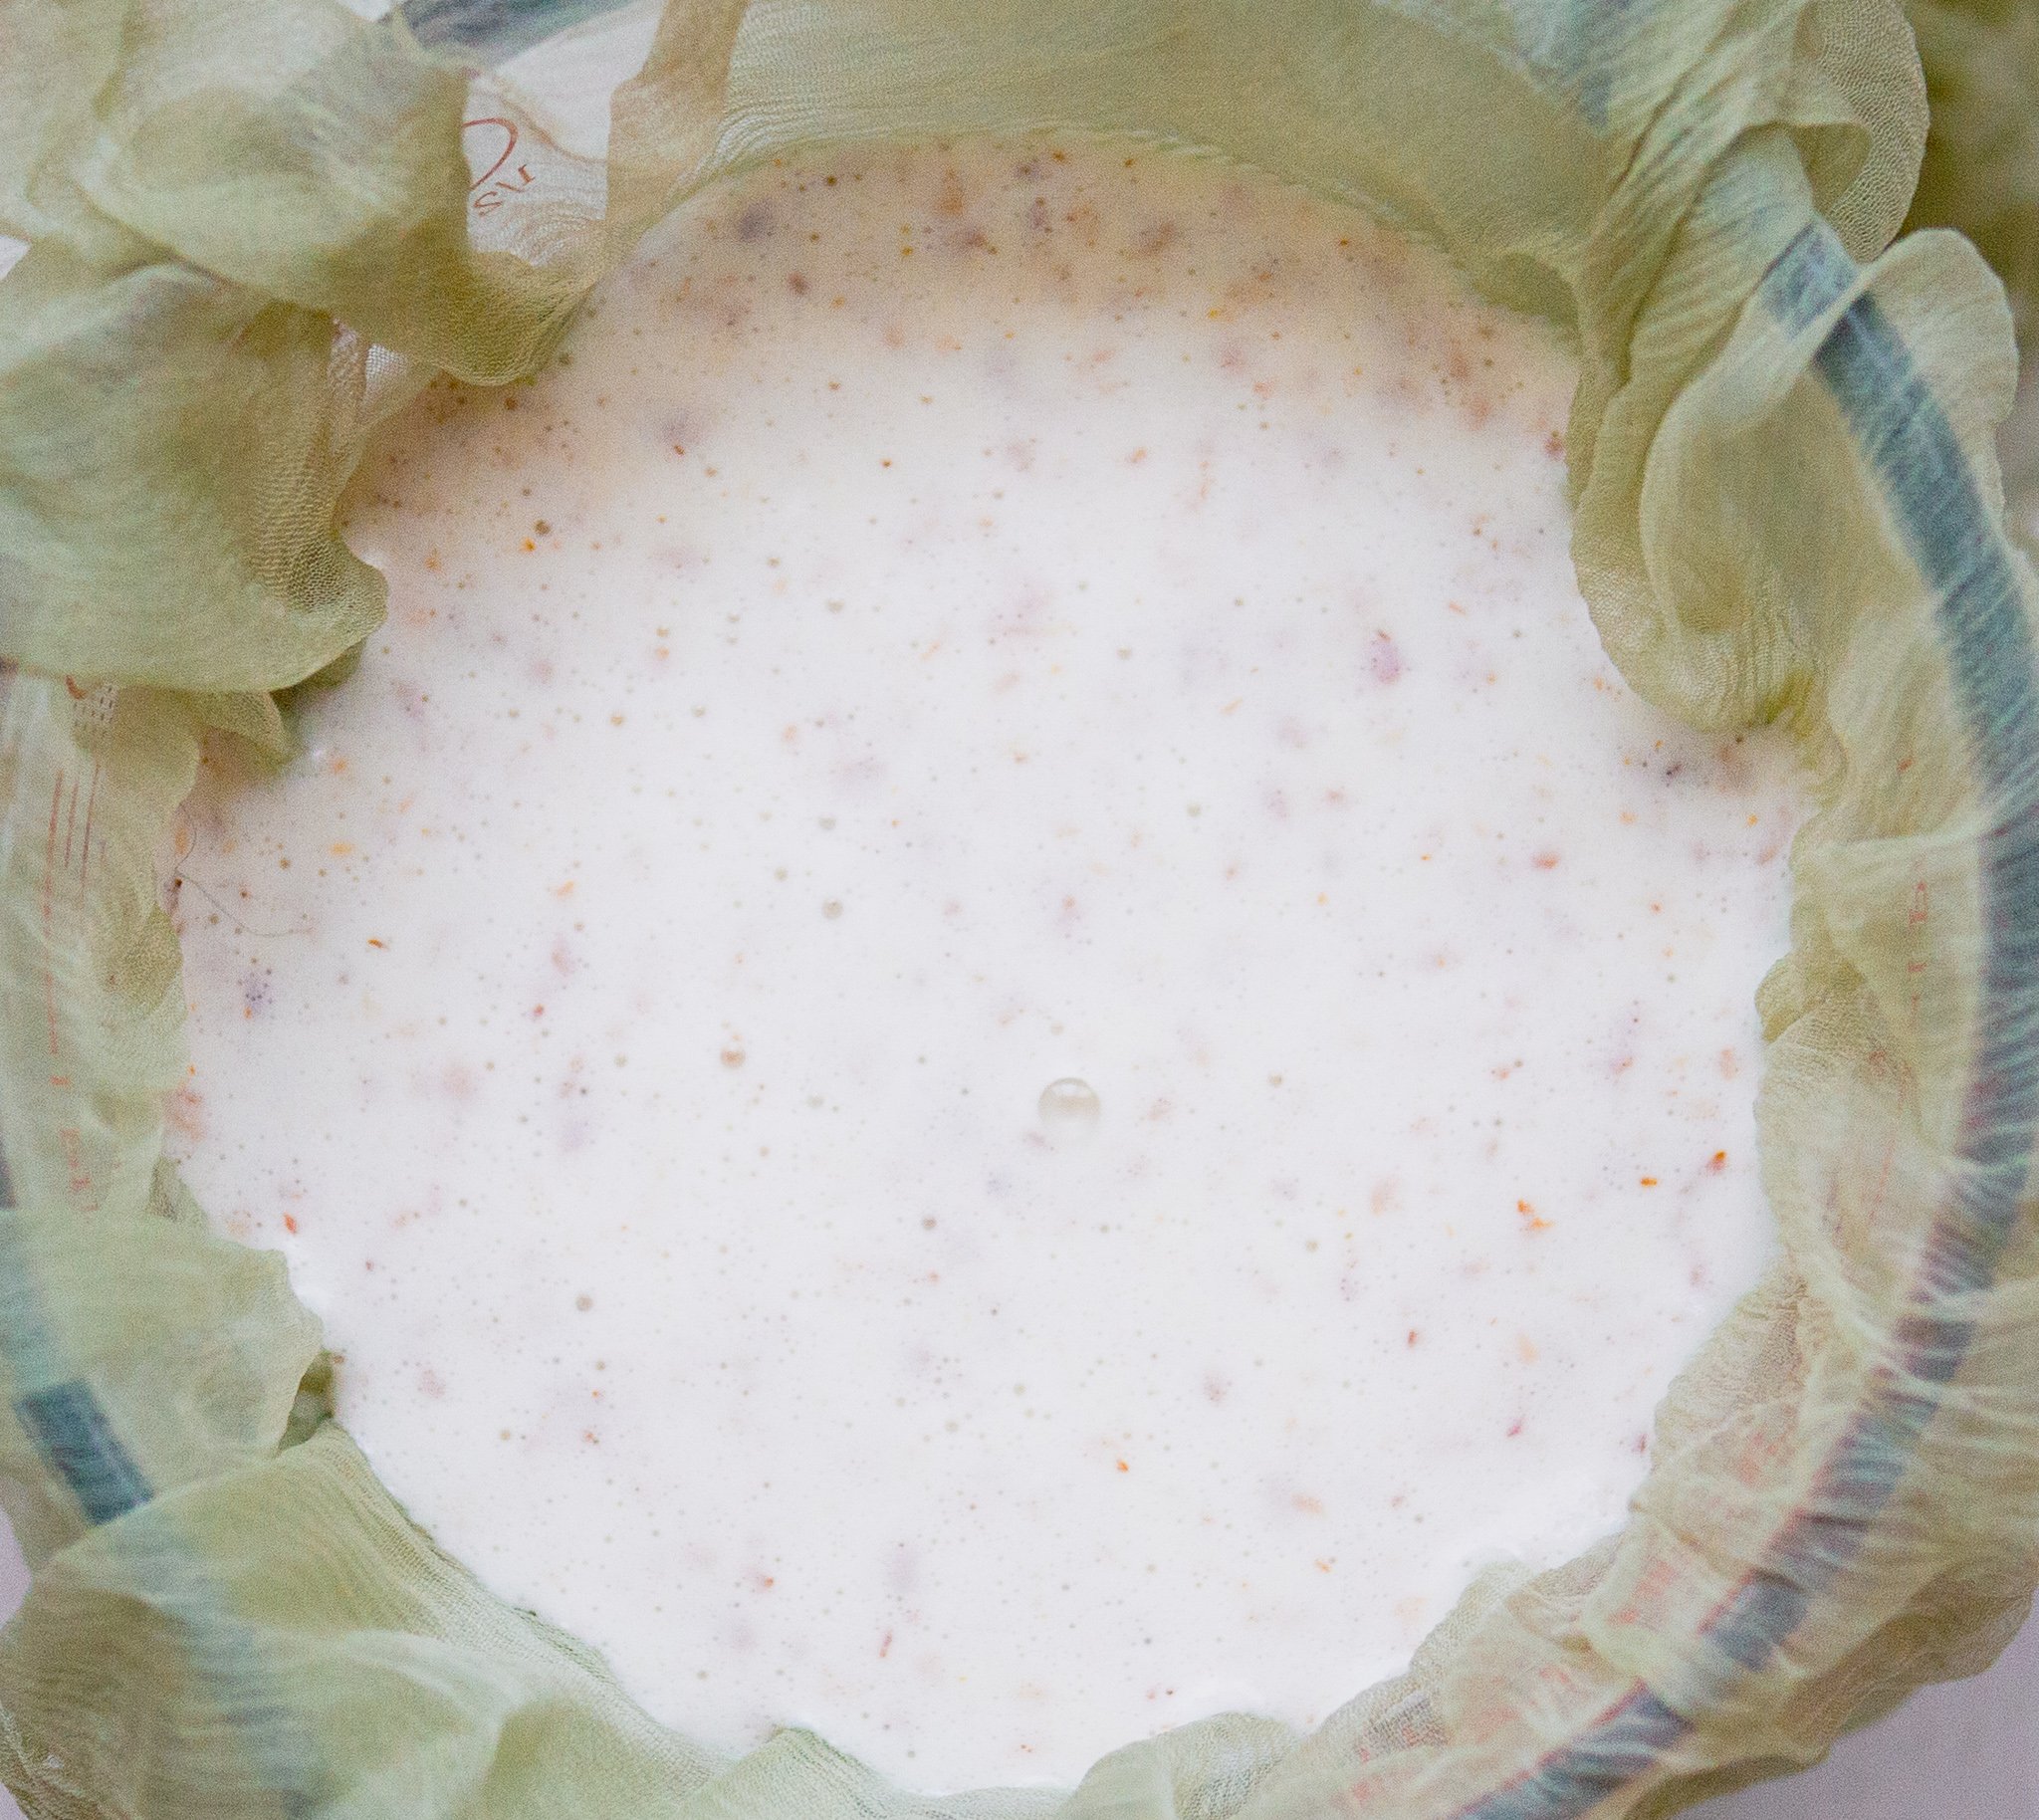 homemade almond milk by kam sokhi allergy chef